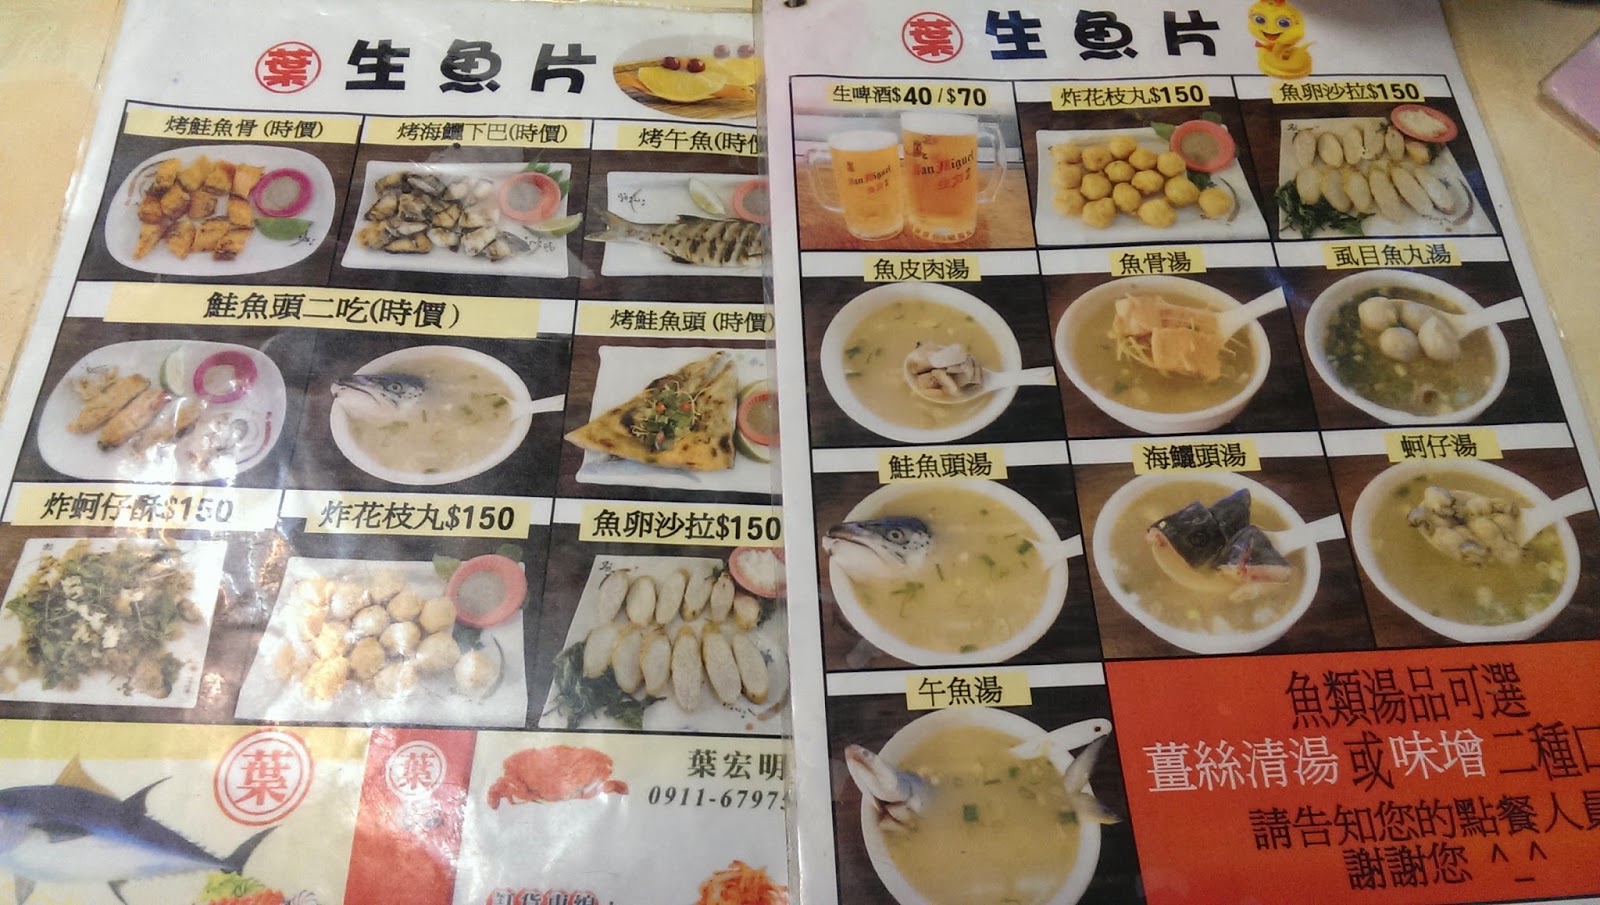 2015 02 02%2B12.02.43 - [食記] 葉家生魚片 - 布袋觀光漁市中的鮮魚餐廳